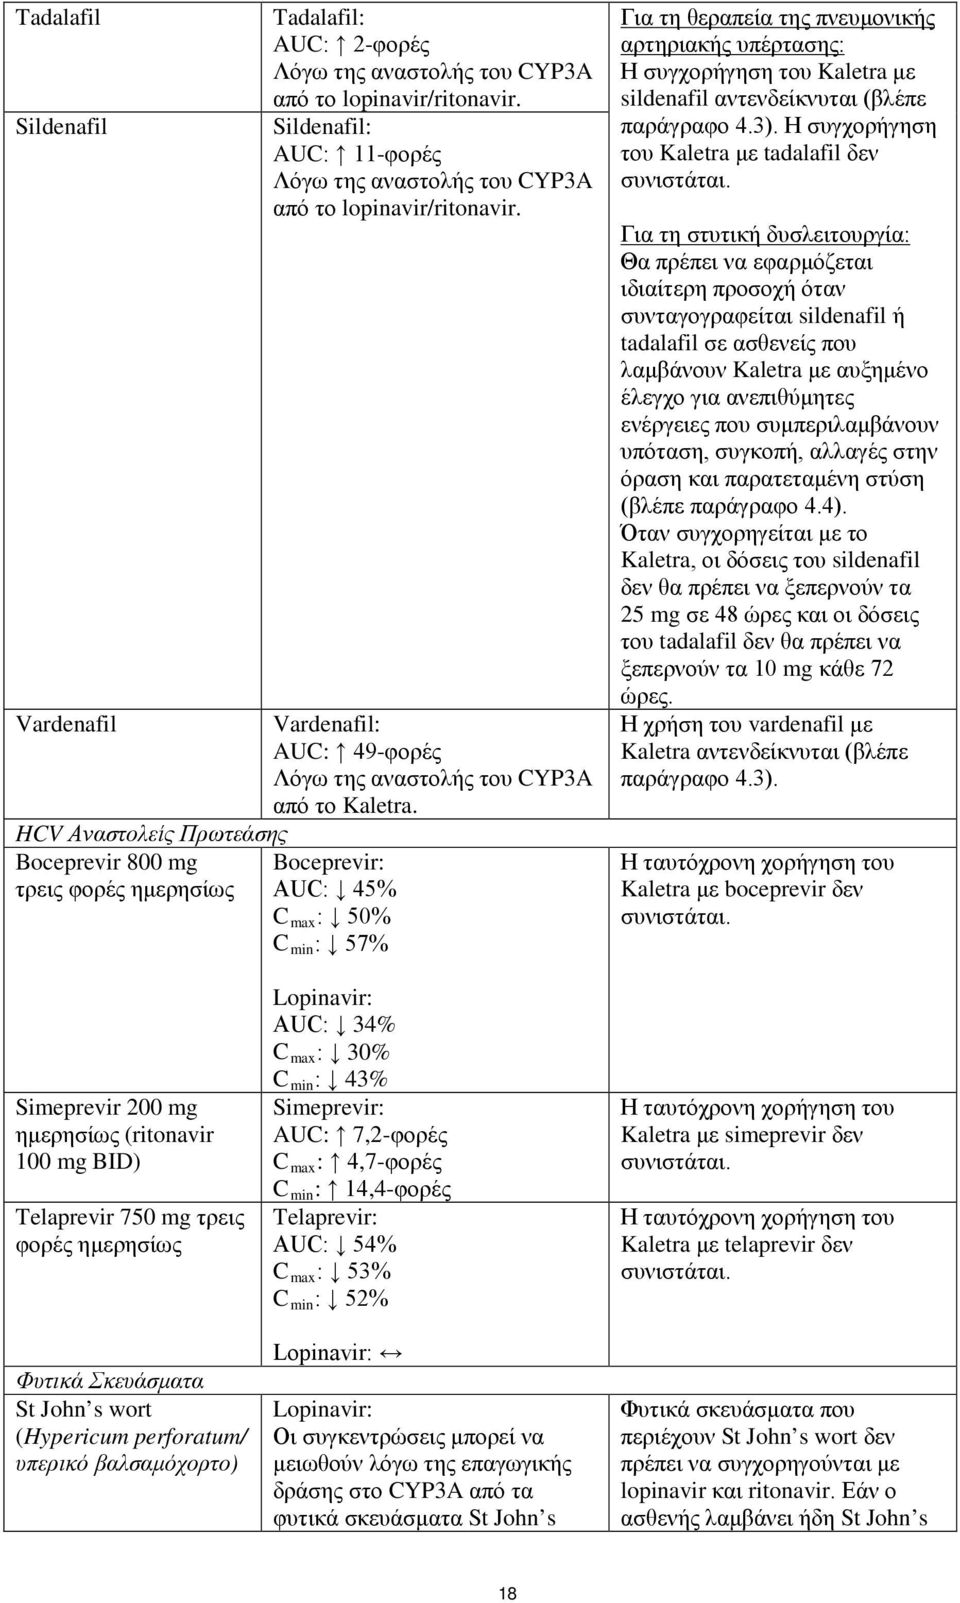 Boceprevir: AUC: 45% C max : 50% C min : 57% Για τη θεραπεία της πνευμονικής αρτηριακής υπέρτασης: Η συγχορήγηση του Kaletra με sildenafil αντενδείκνυται (βλέπε παράγραφο 4.3).